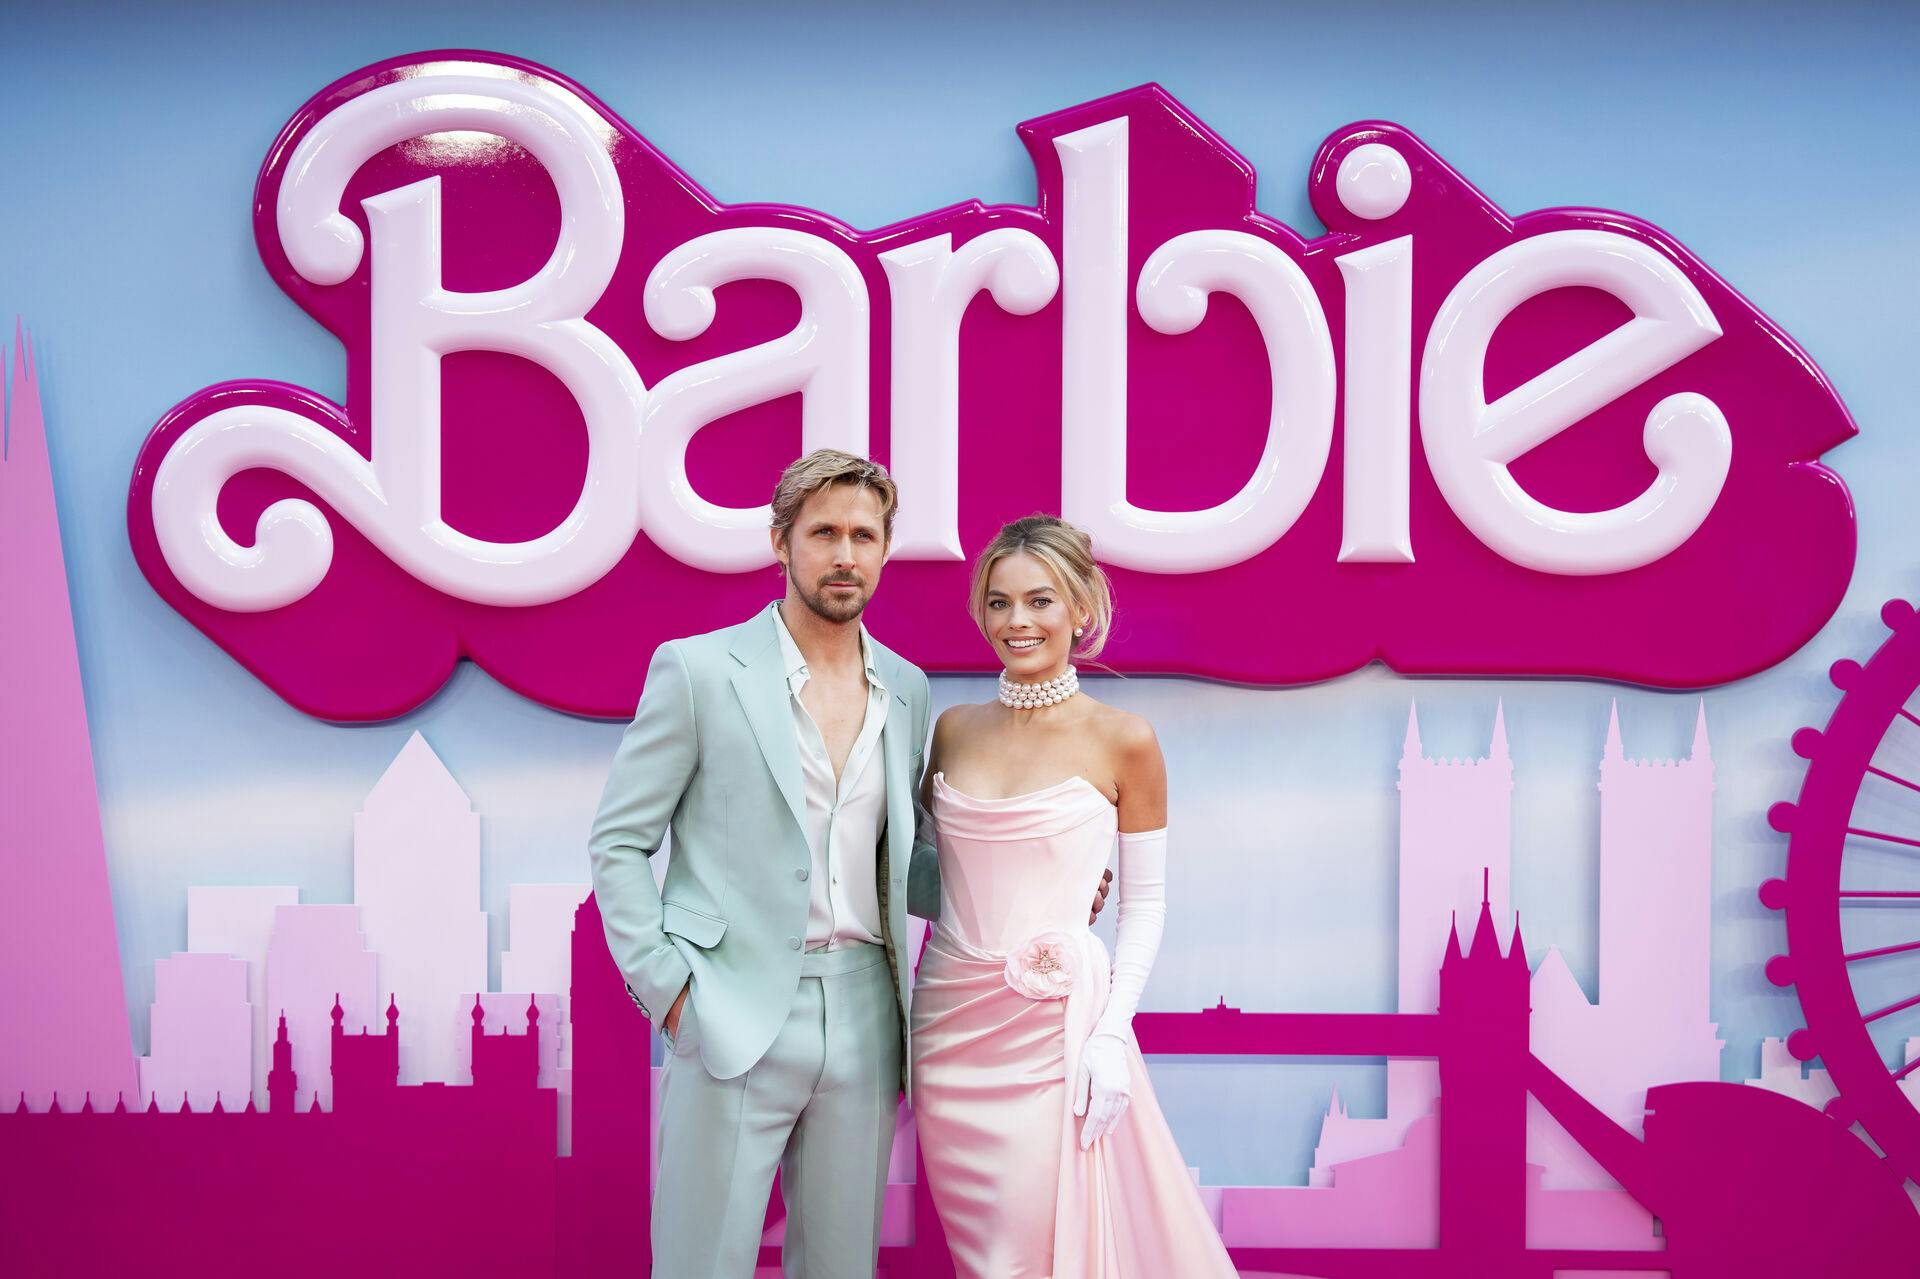 I dag har "Barbie" premiere med Ryan Gosling og Margot Robbie i hovedrollerne. Også filmen "Oppenheimer" har premiere torsdag.